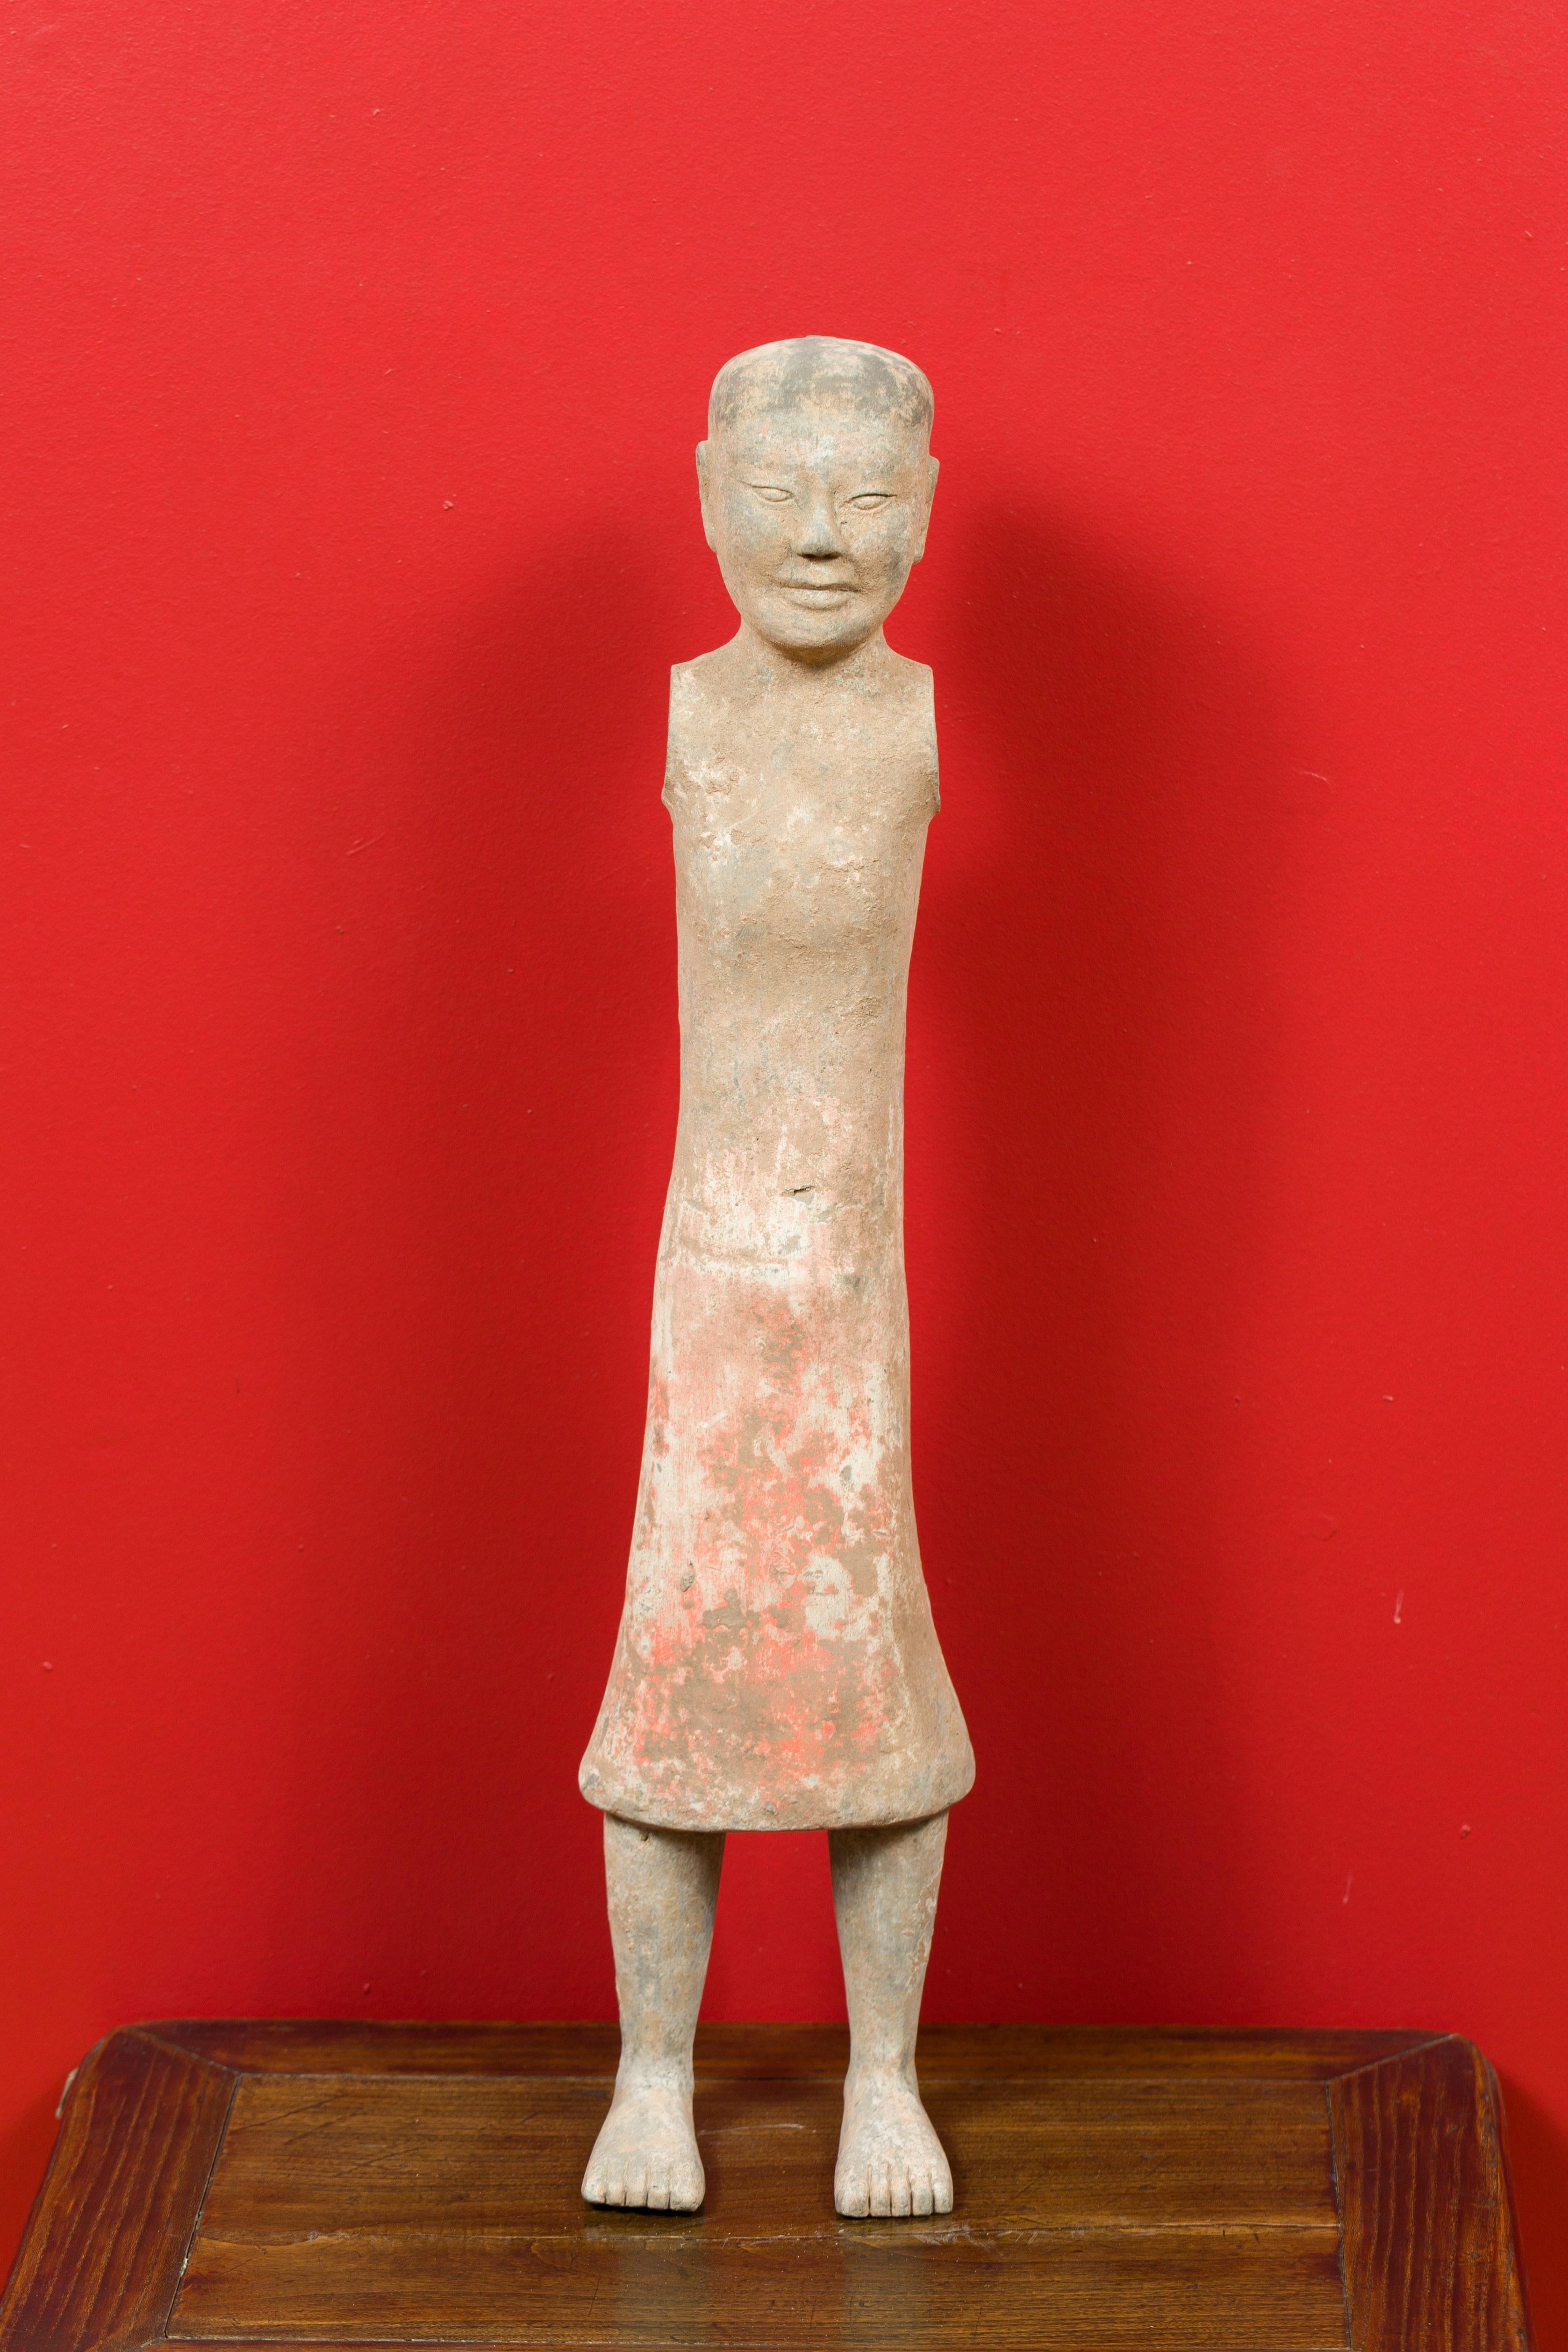 Western Han Dynasty 206 BC-24 AD Chinese Figurine with Original Polychromy 6